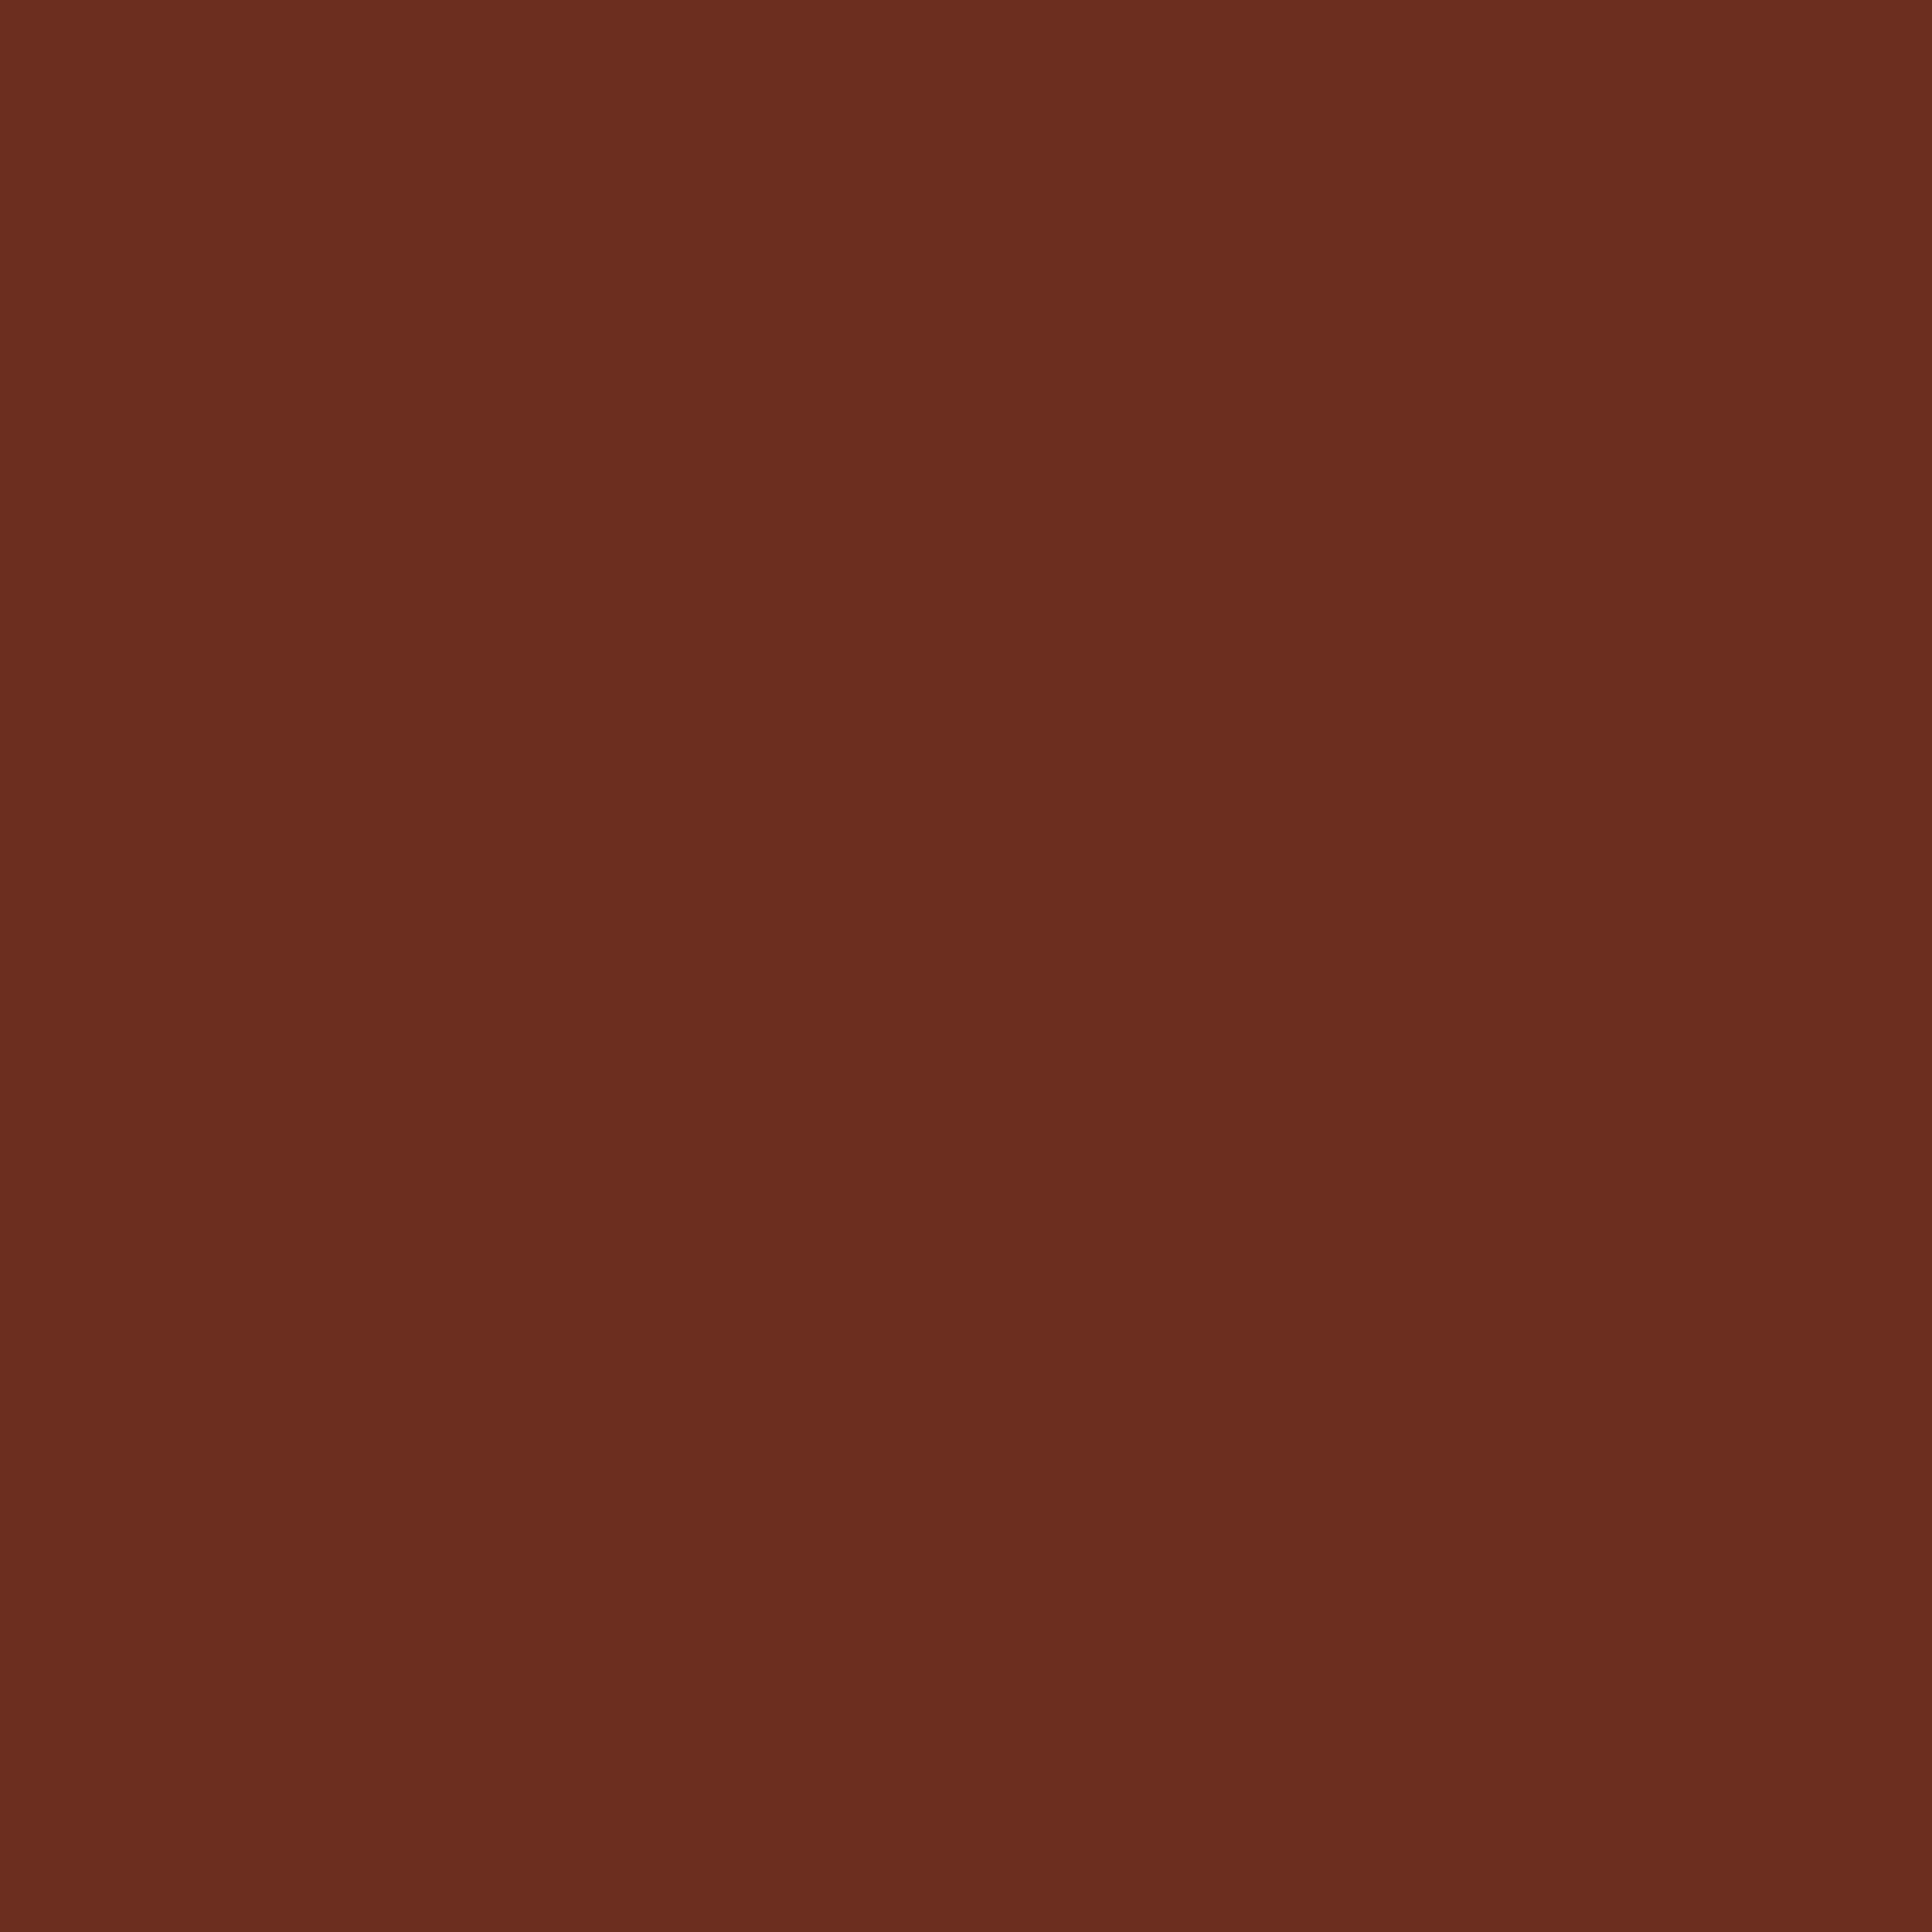 2048x2048 Liver Organ Solid Color Background